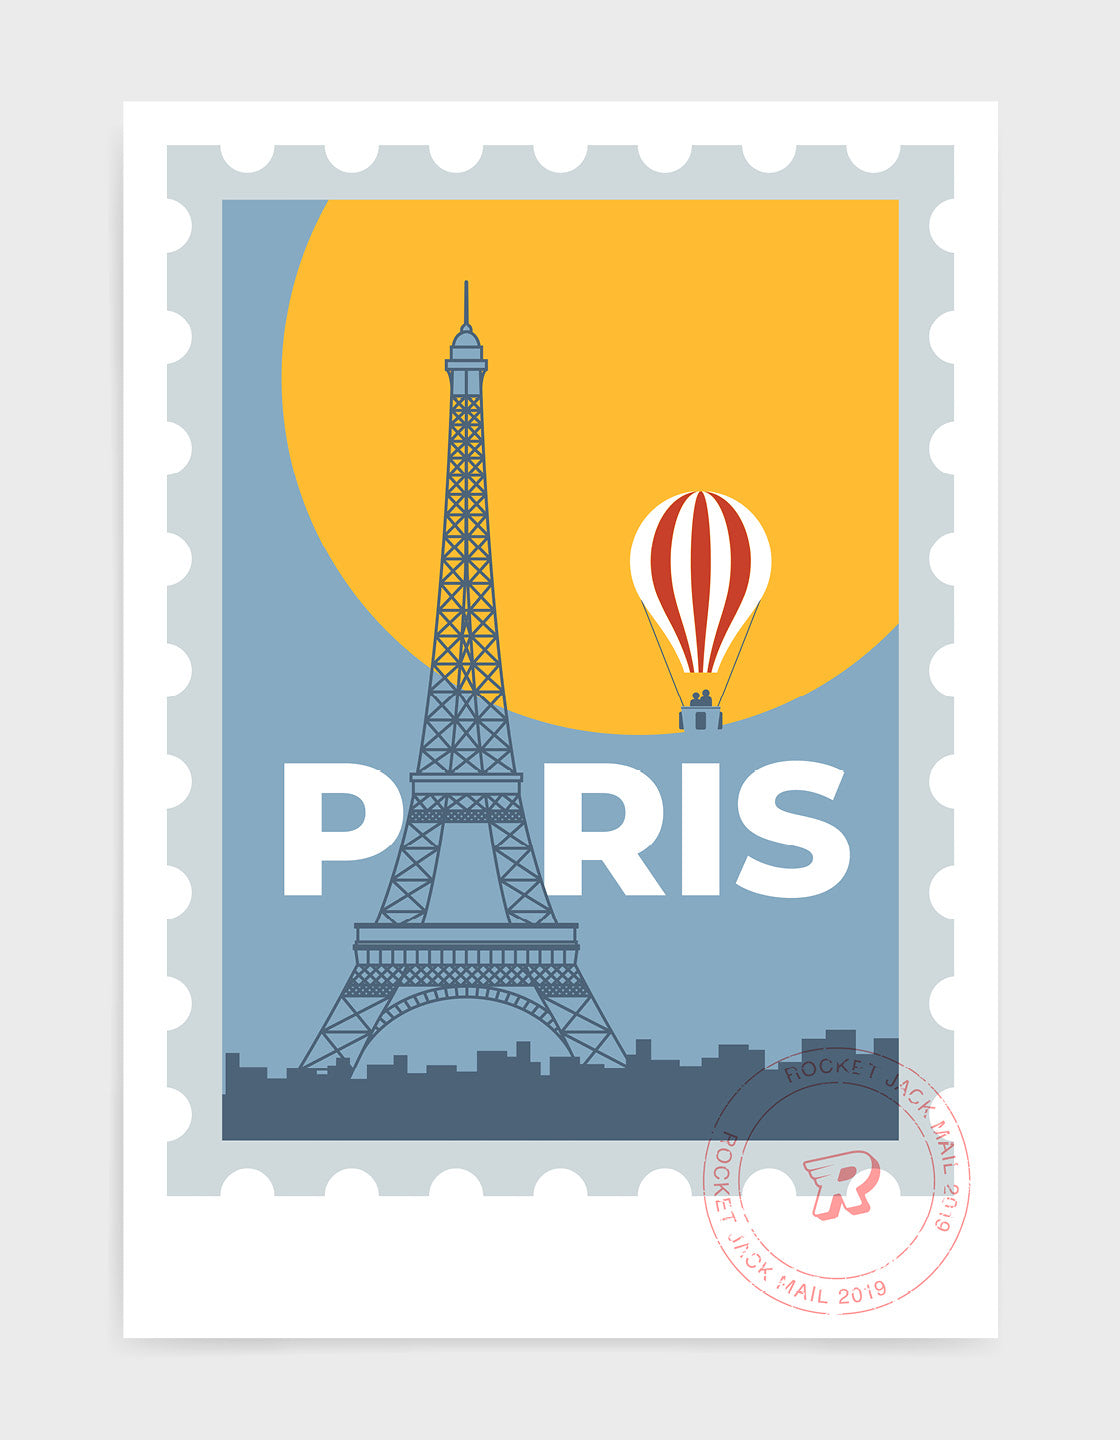 Paris stamp print featuring a hot air balloon and the Eiffel Tower